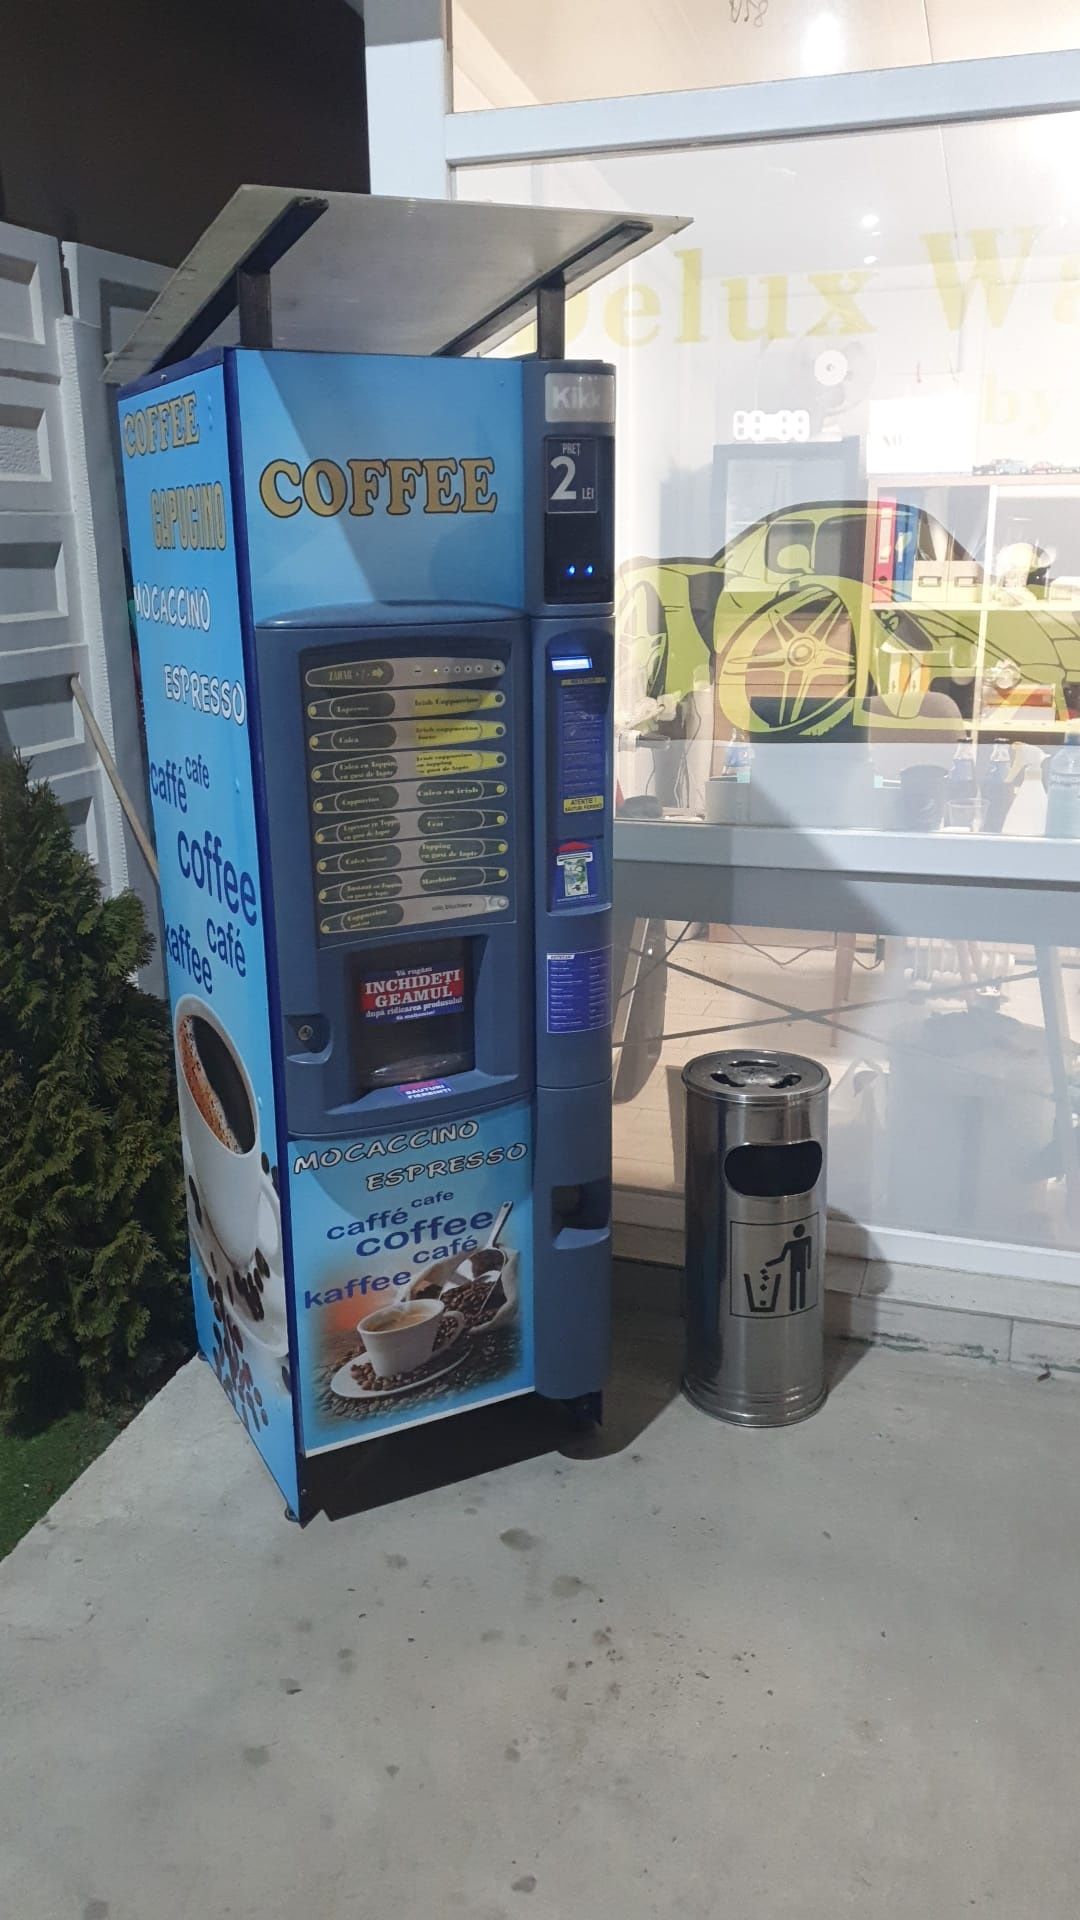 Vând aparat cafea vending kikko necta